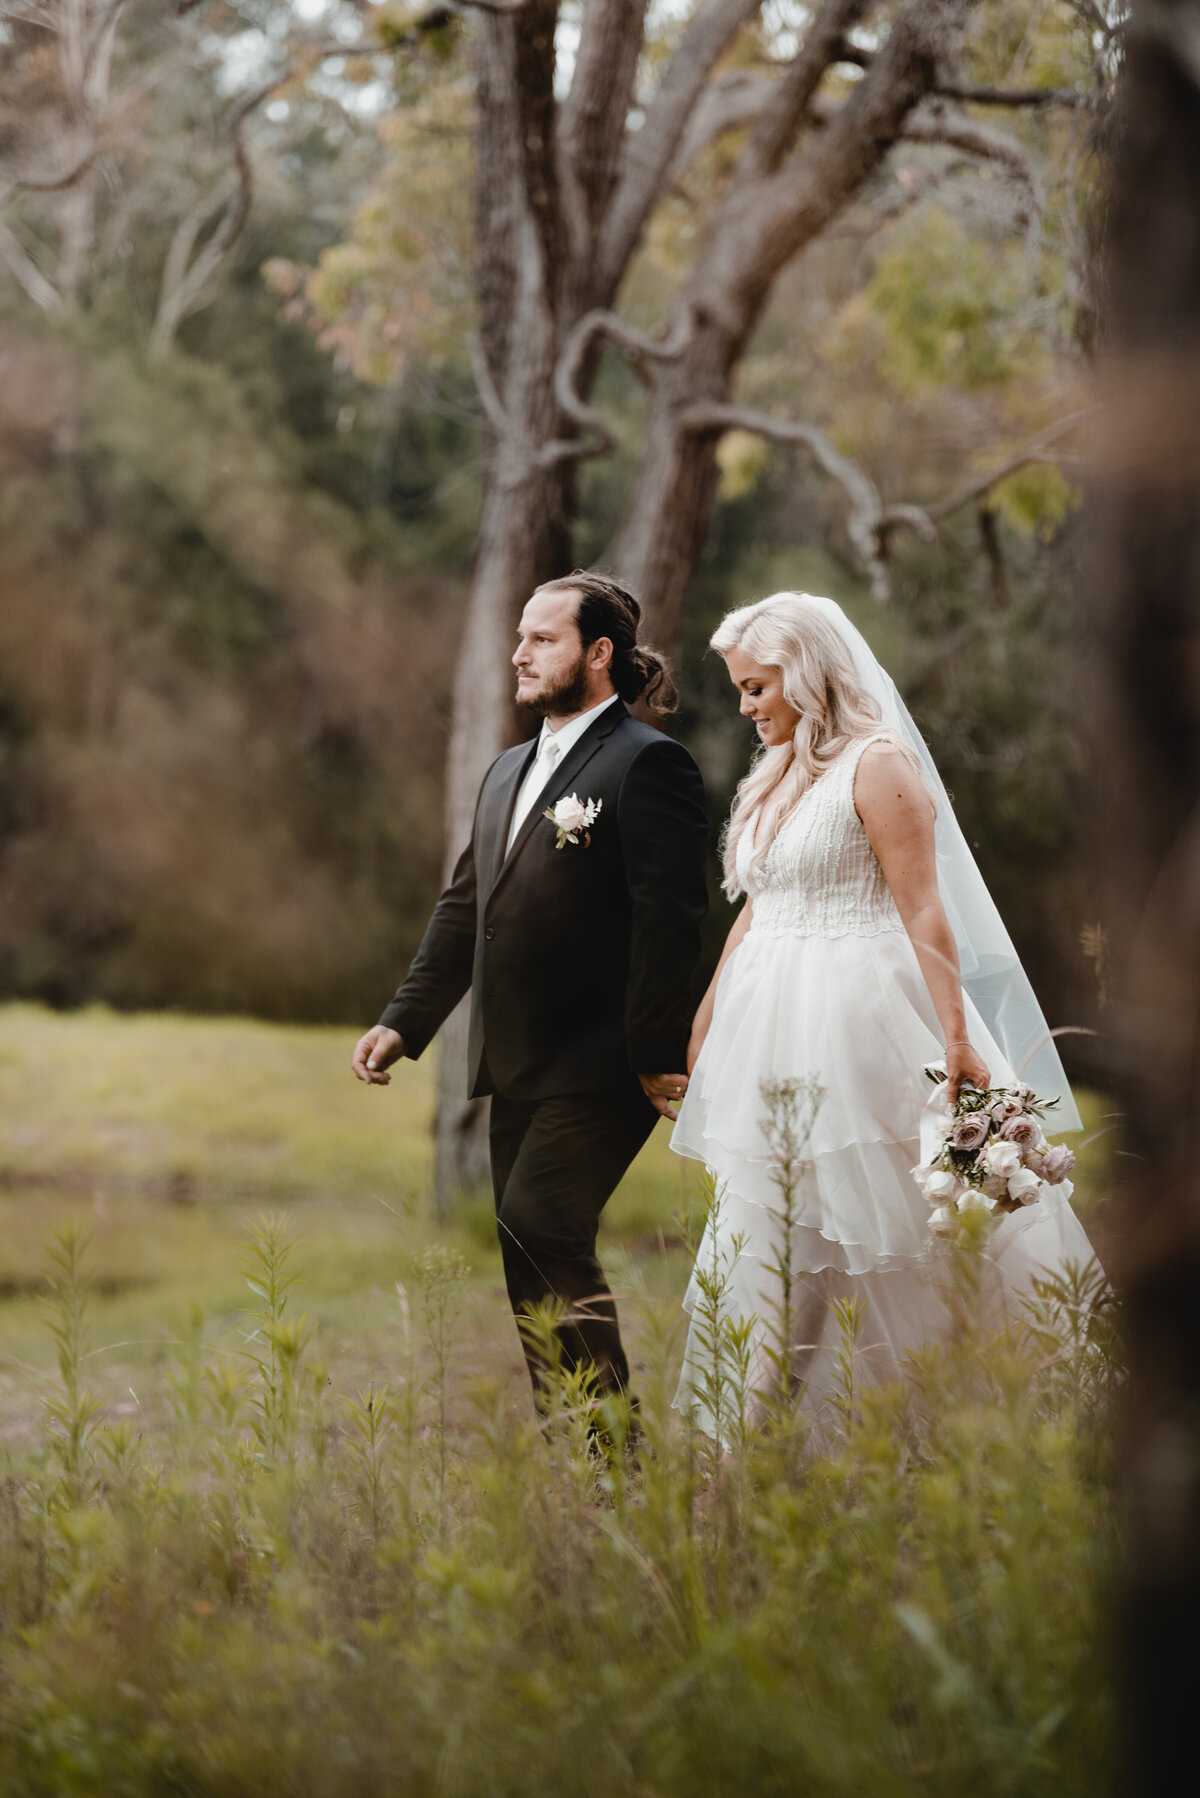 Abigail_Steven_Wedding_Images_Roam Ahead Weddings - 616